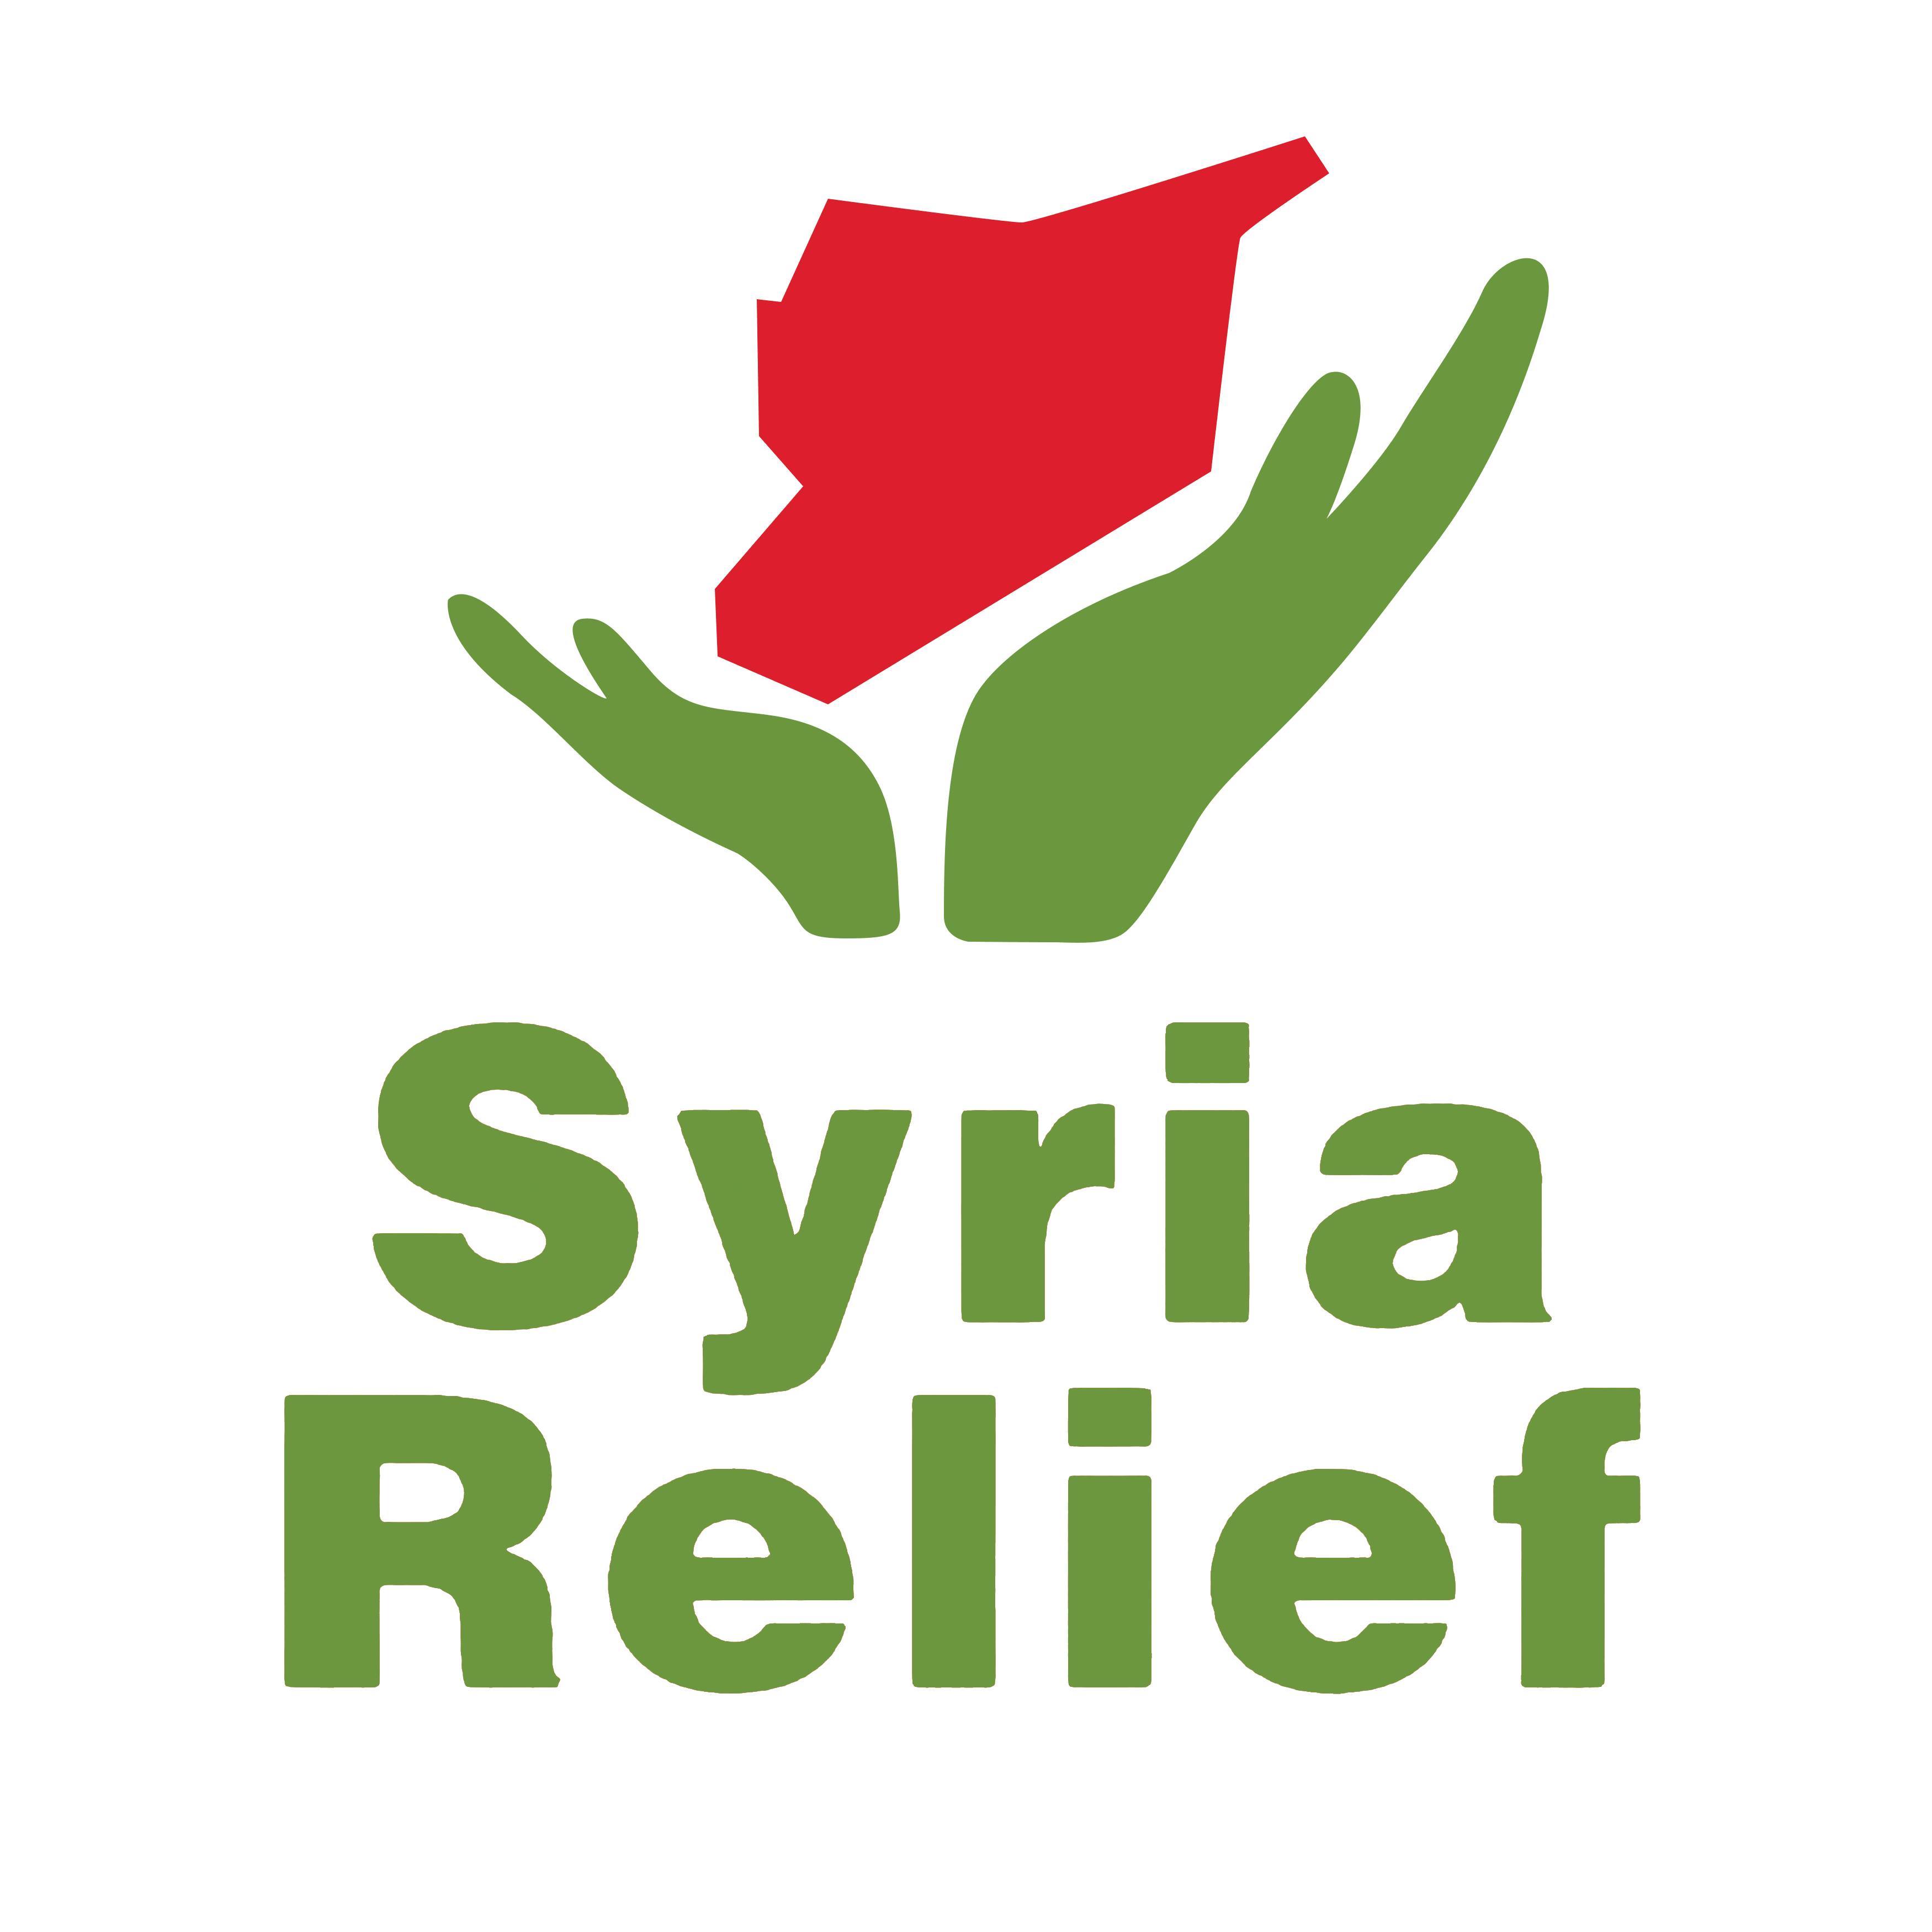 Relief Logo - Syria relief Logos